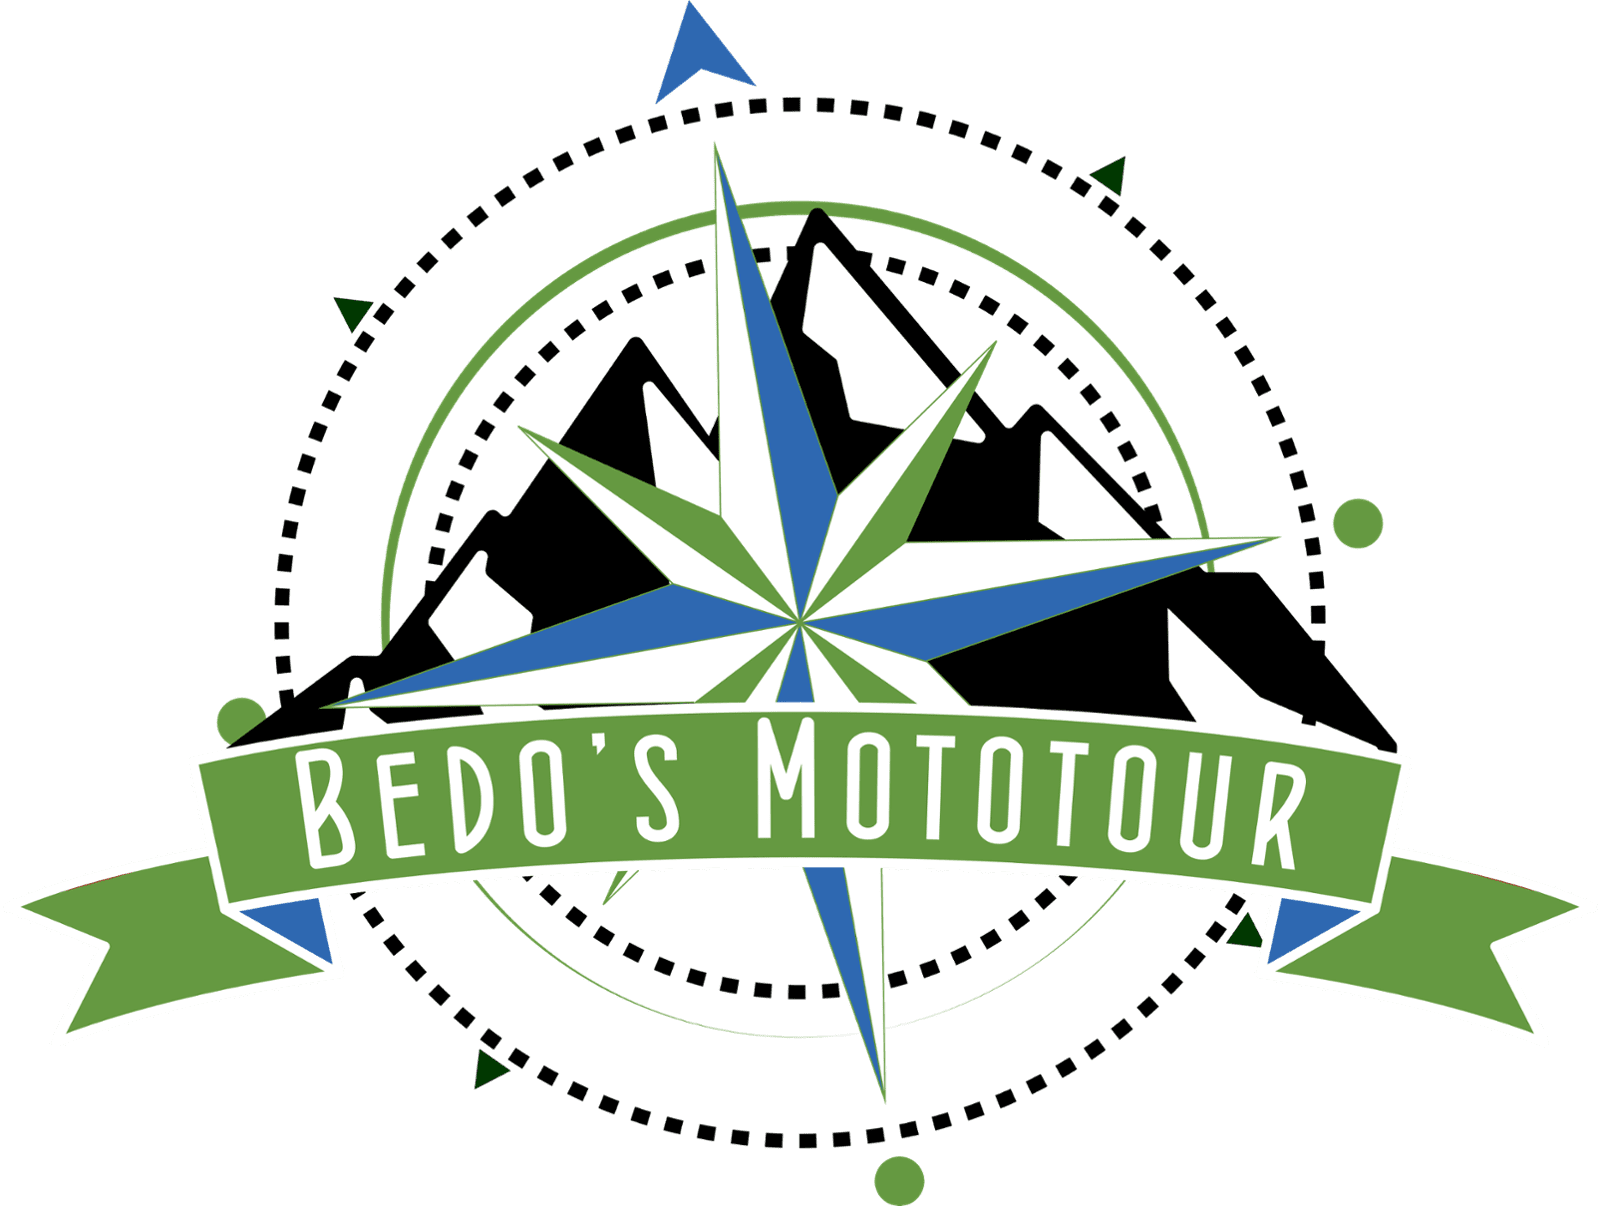 Bedo's Mototour